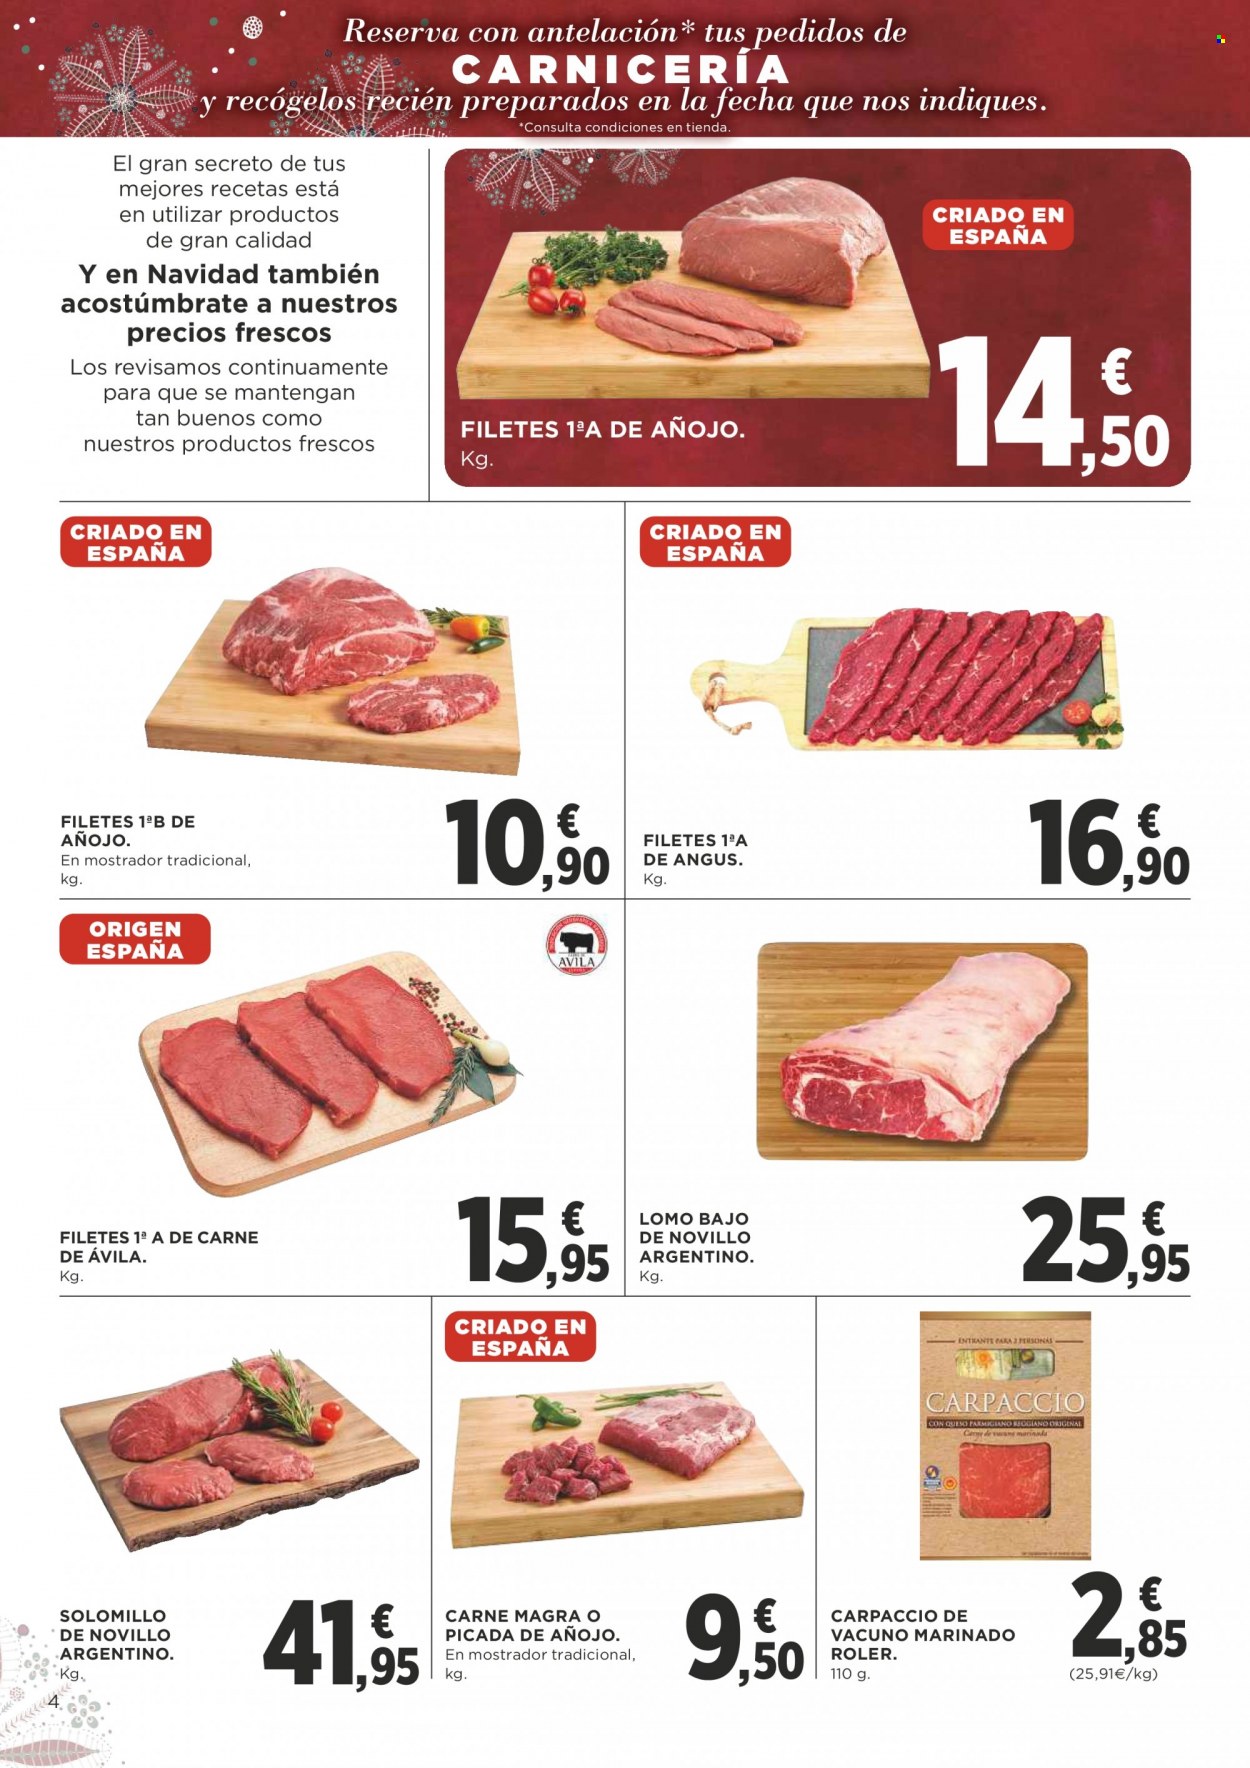 thumbnail - Folleto actual Supercor supermercados - 02/12/21 - 15/12/21 - Ventas - lomo, solomillo, angus, carpaccio. Página 4.